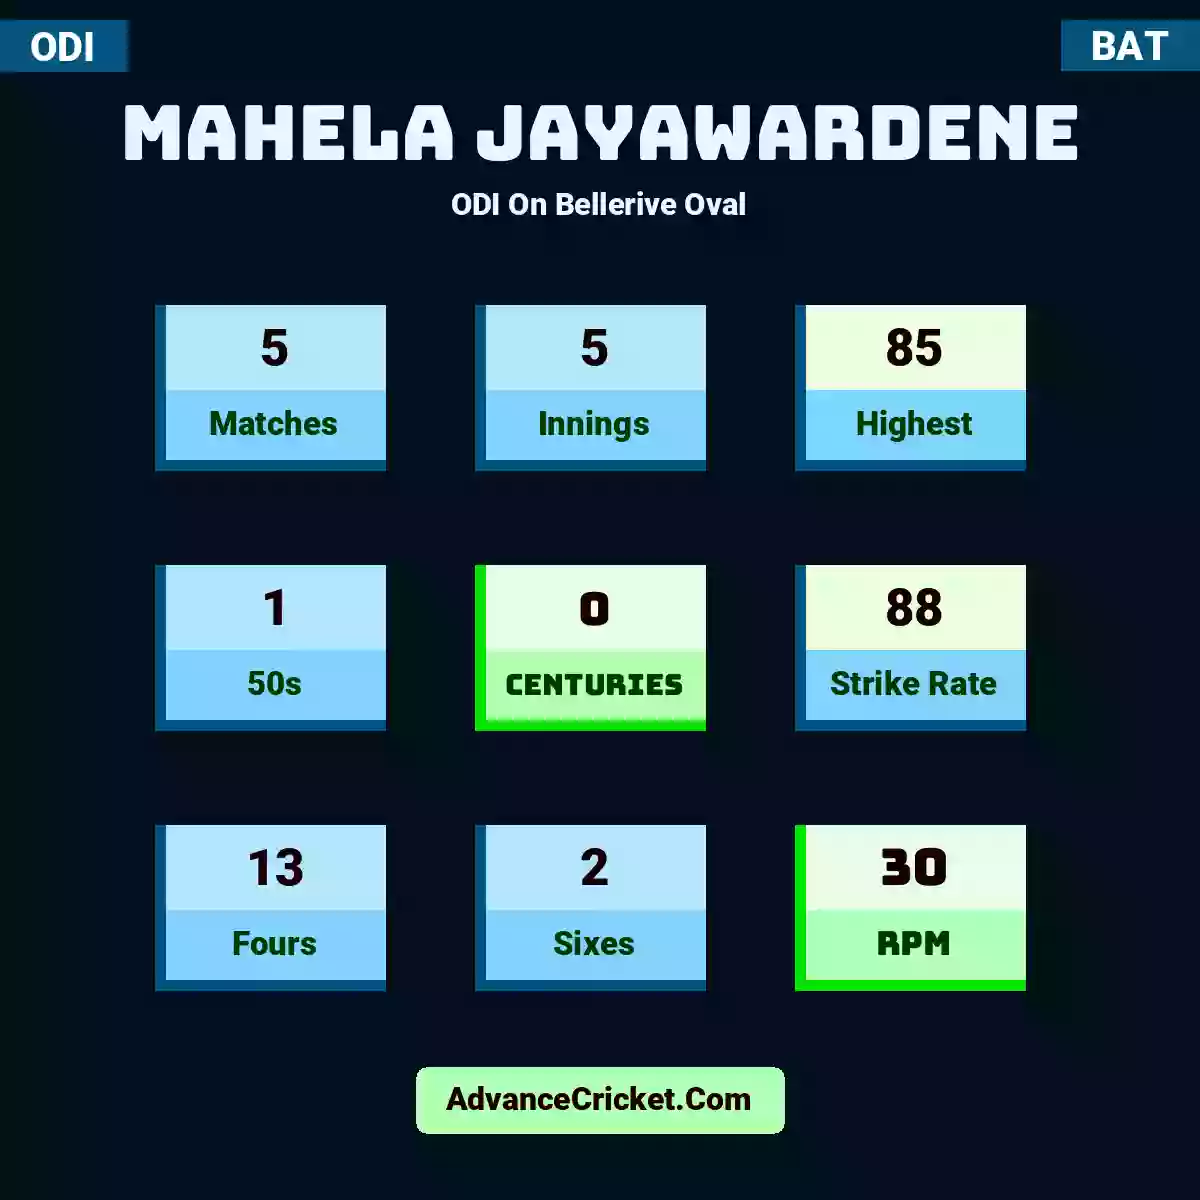 Mahela Jayawardene ODI  On Bellerive Oval, Mahela Jayawardene played 5 matches, scored 85 runs as highest, 1 half-centuries, and 0 centuries, with a strike rate of 88. M.Jayawardene hit 13 fours and 2 sixes, with an RPM of 30.